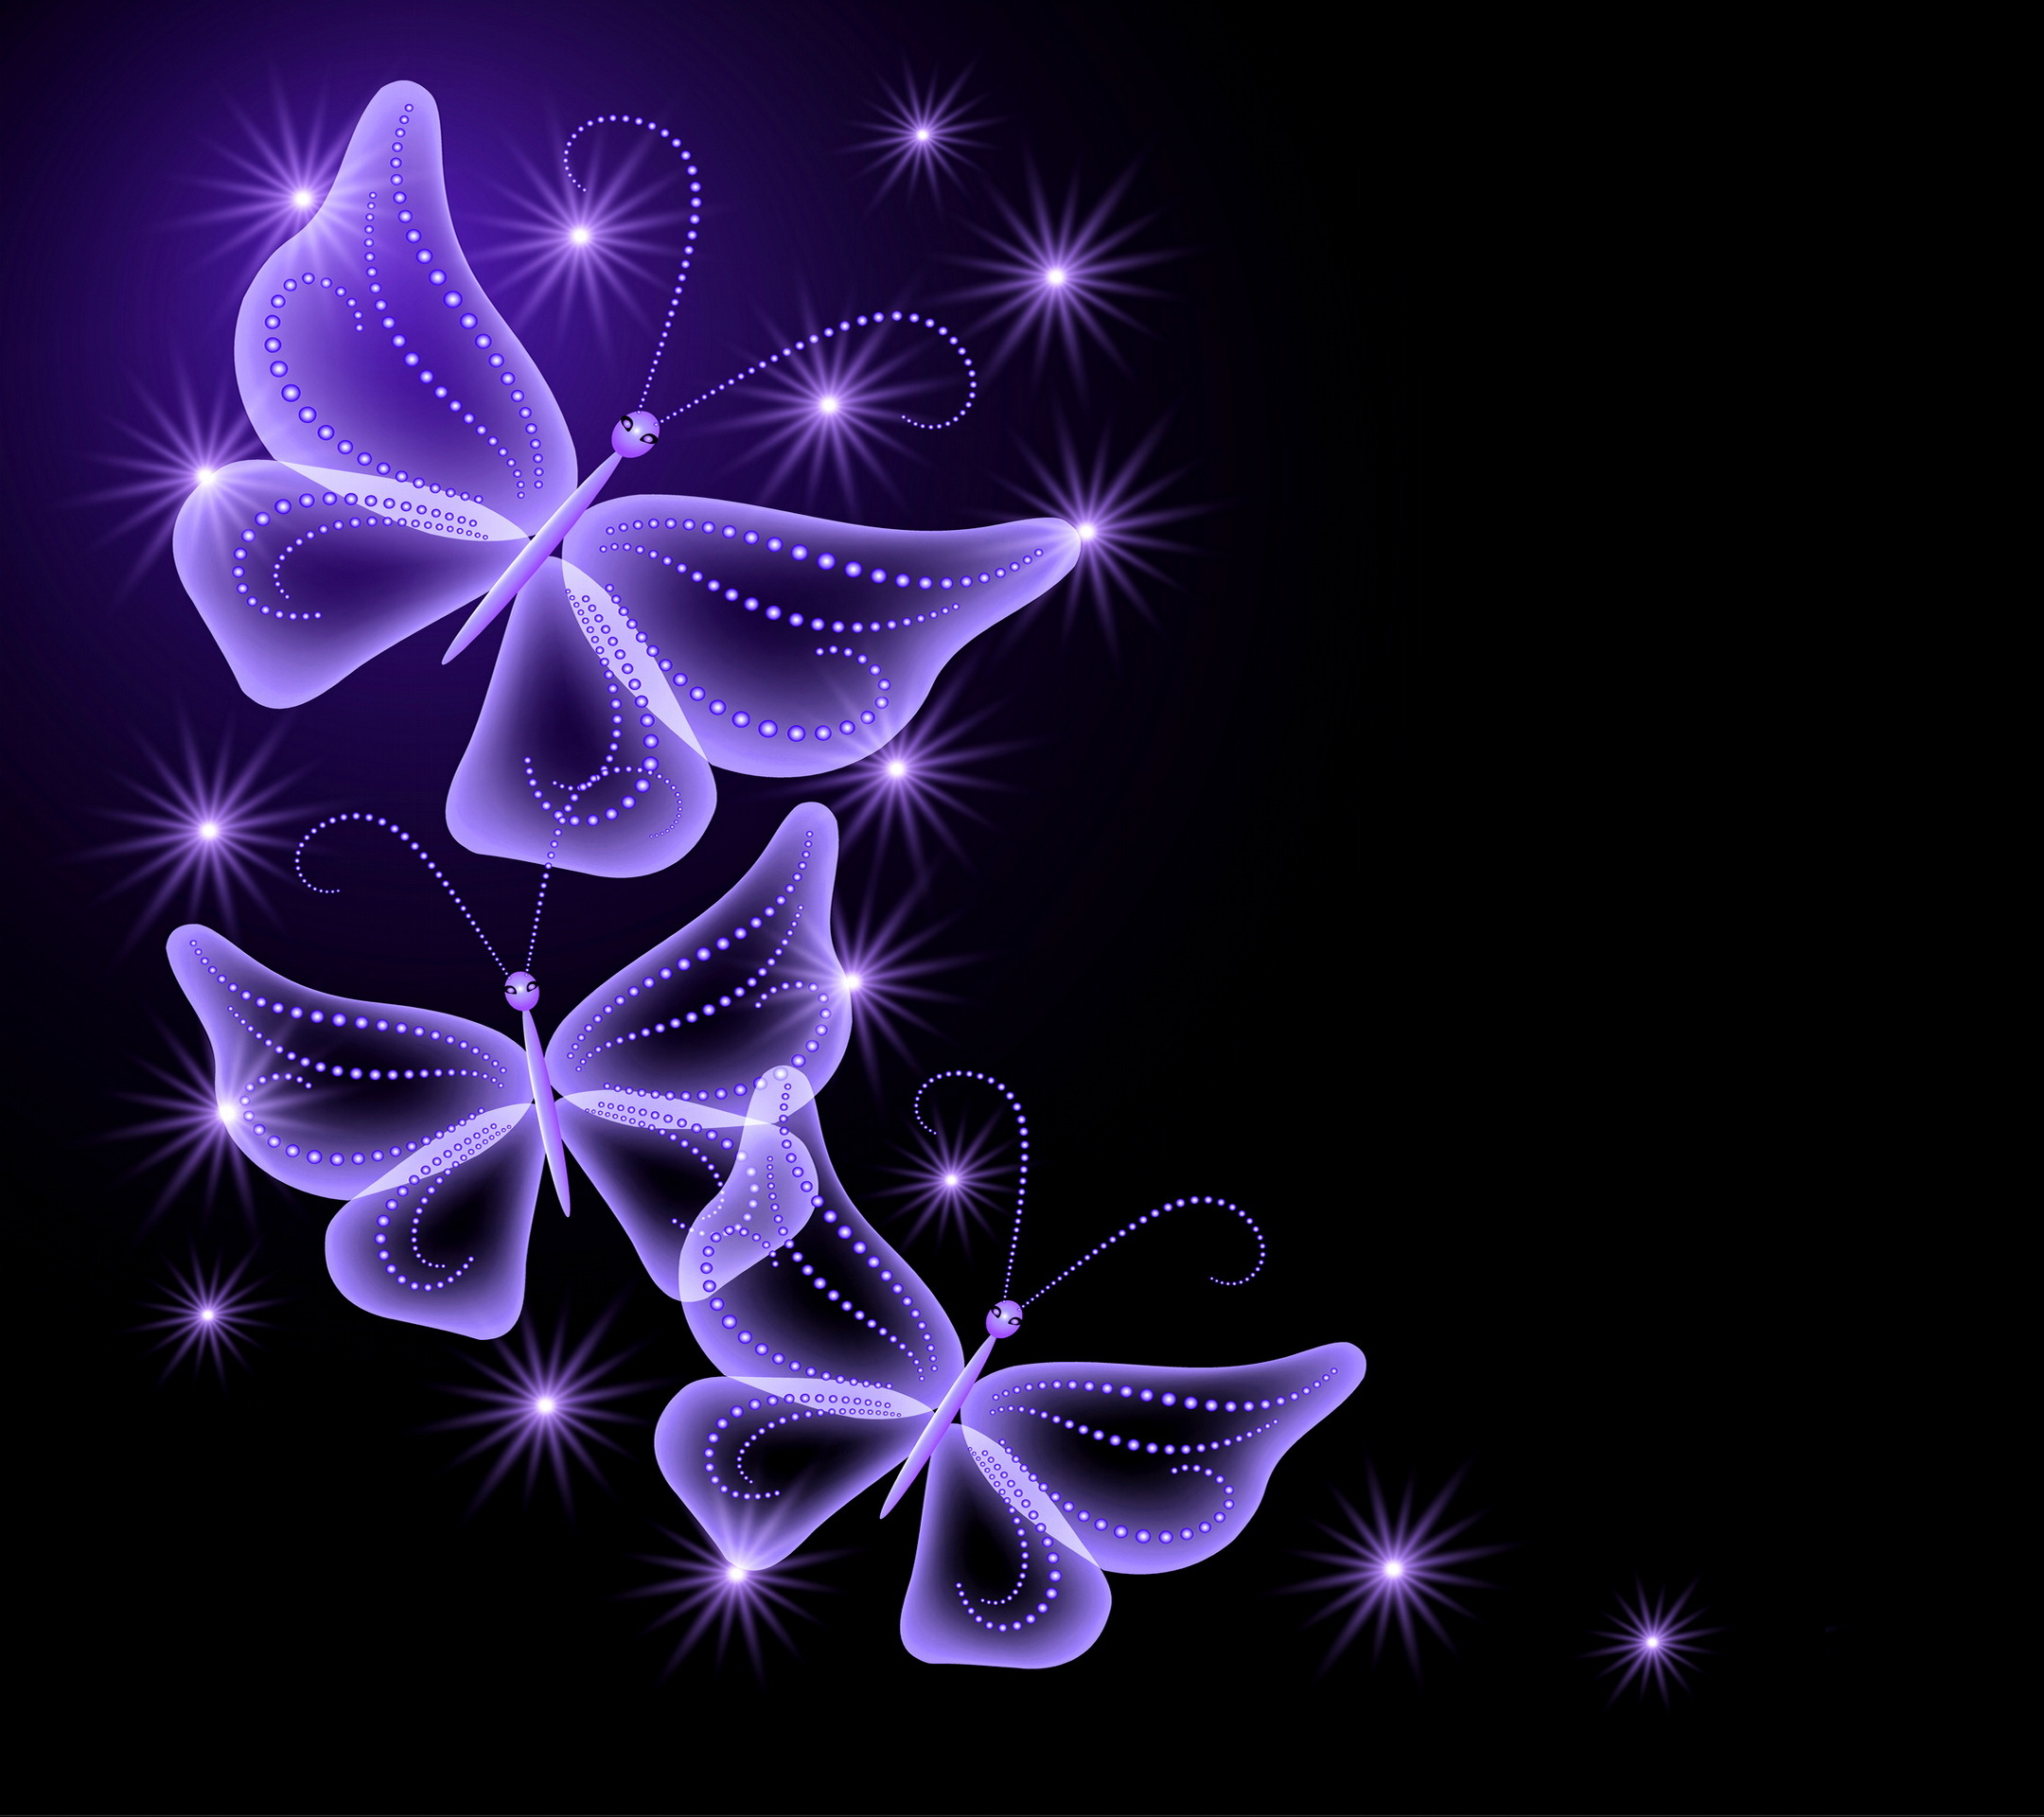 Aesthetic Sparkles Purple Butterflies Wallpapers